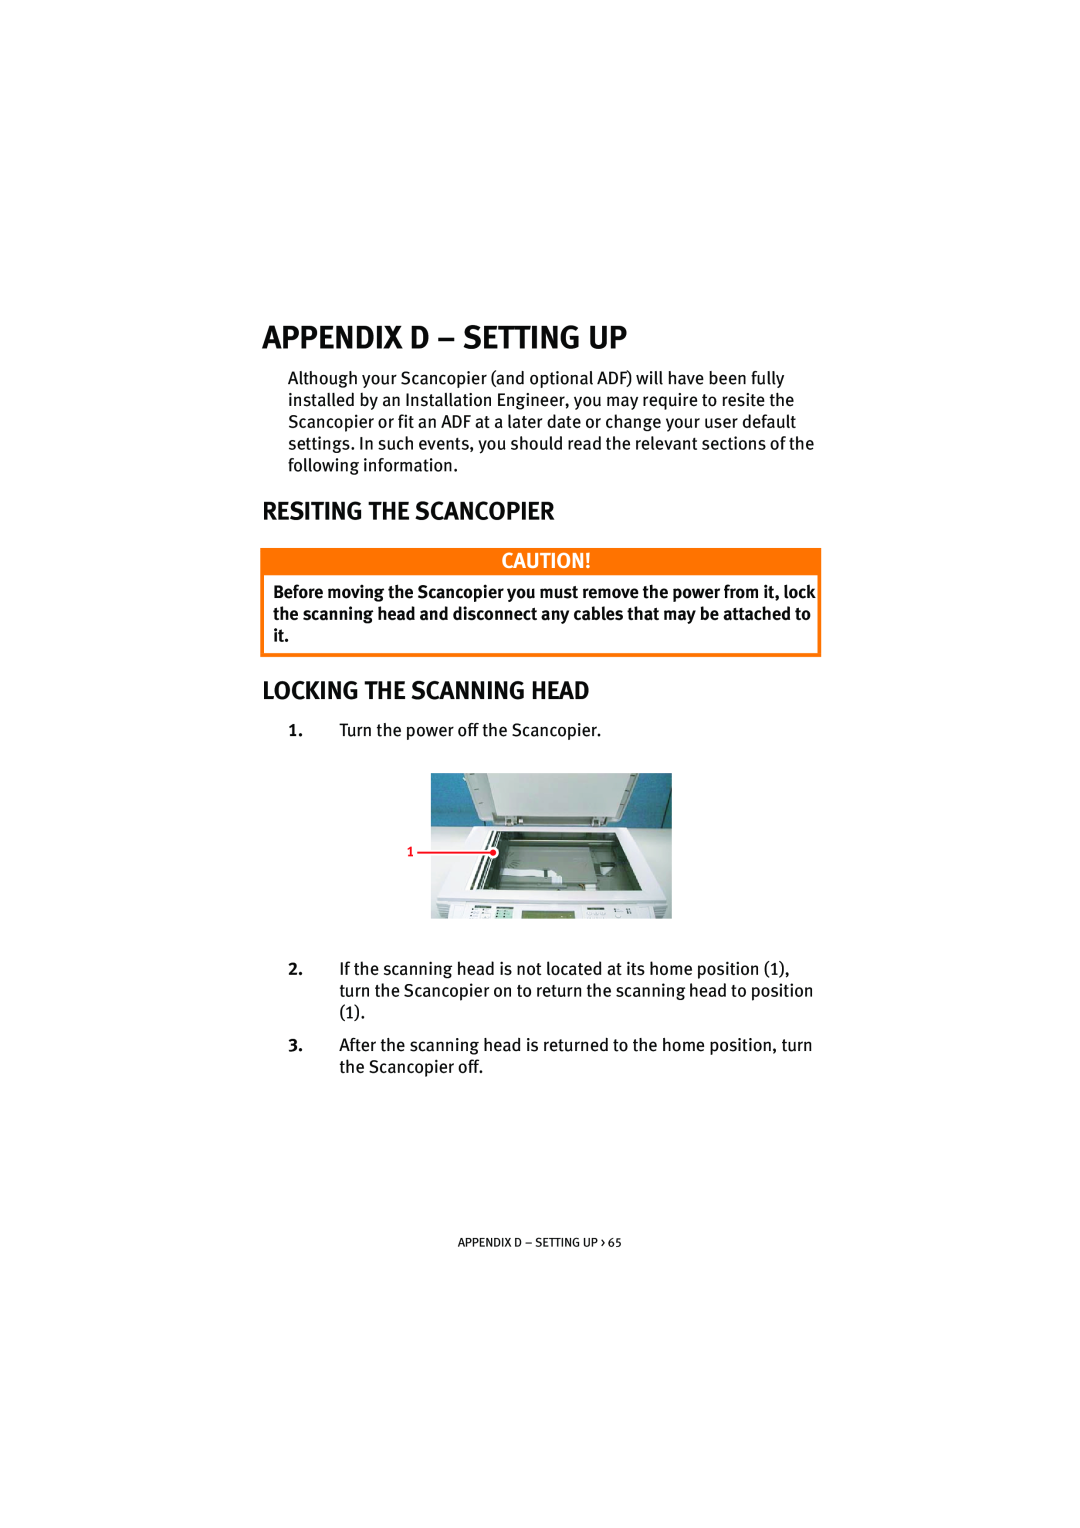 Oki S900 manual Appendix D - Setting Up, Resiting The Scancopier, Locking The Scanning Head 